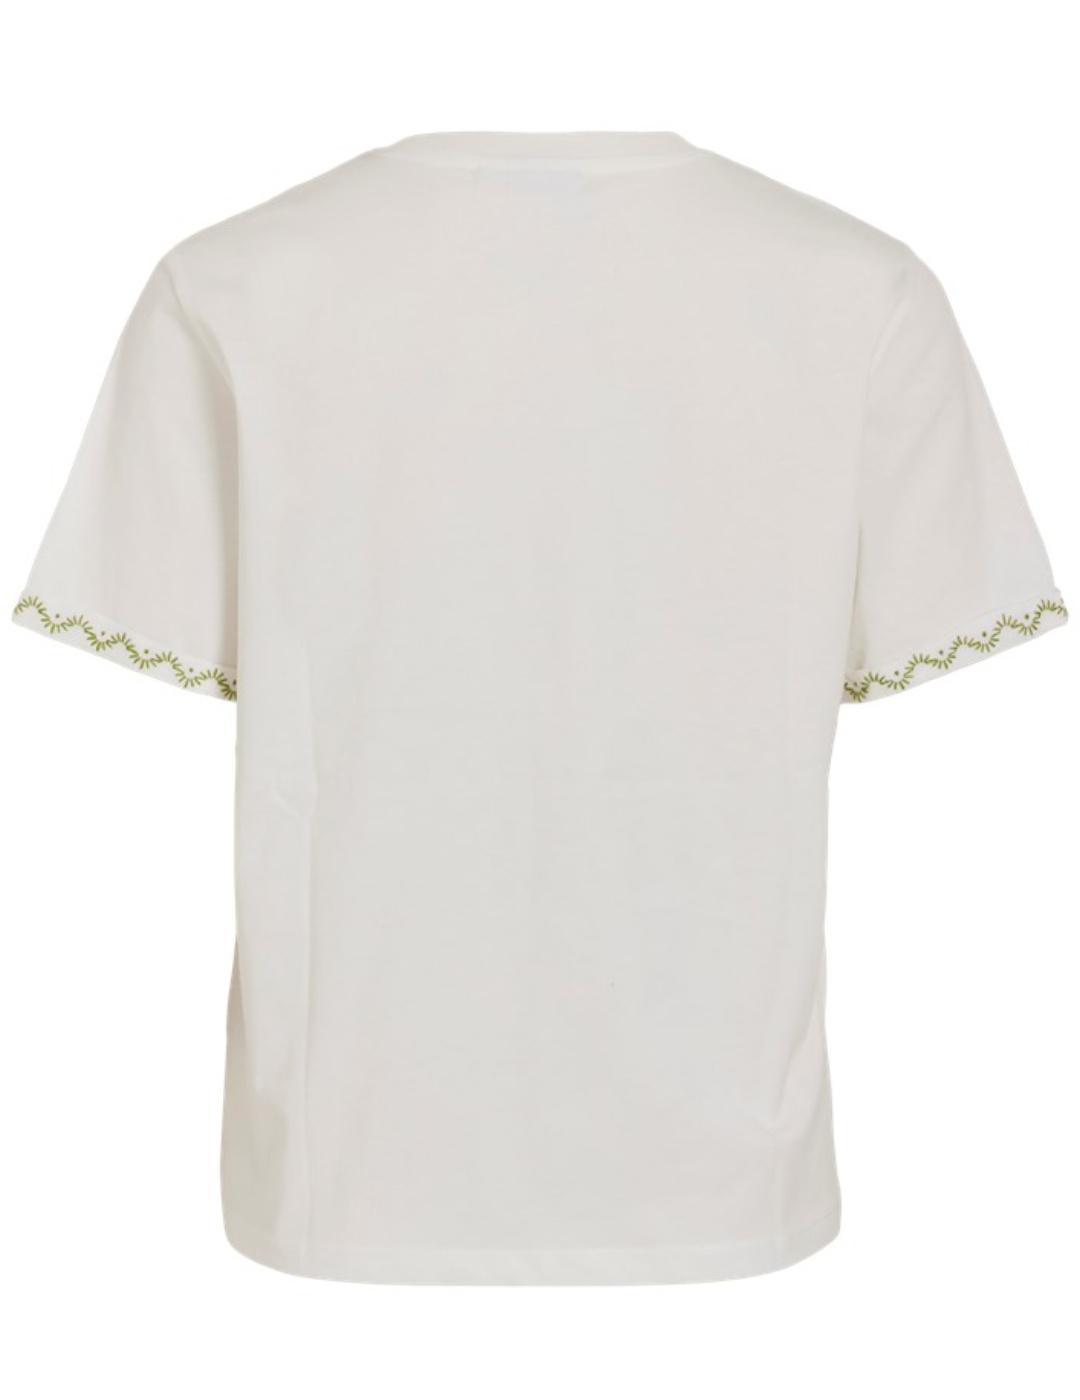 Camiseta Vila Sybil blanca EMB manga corta para mujer